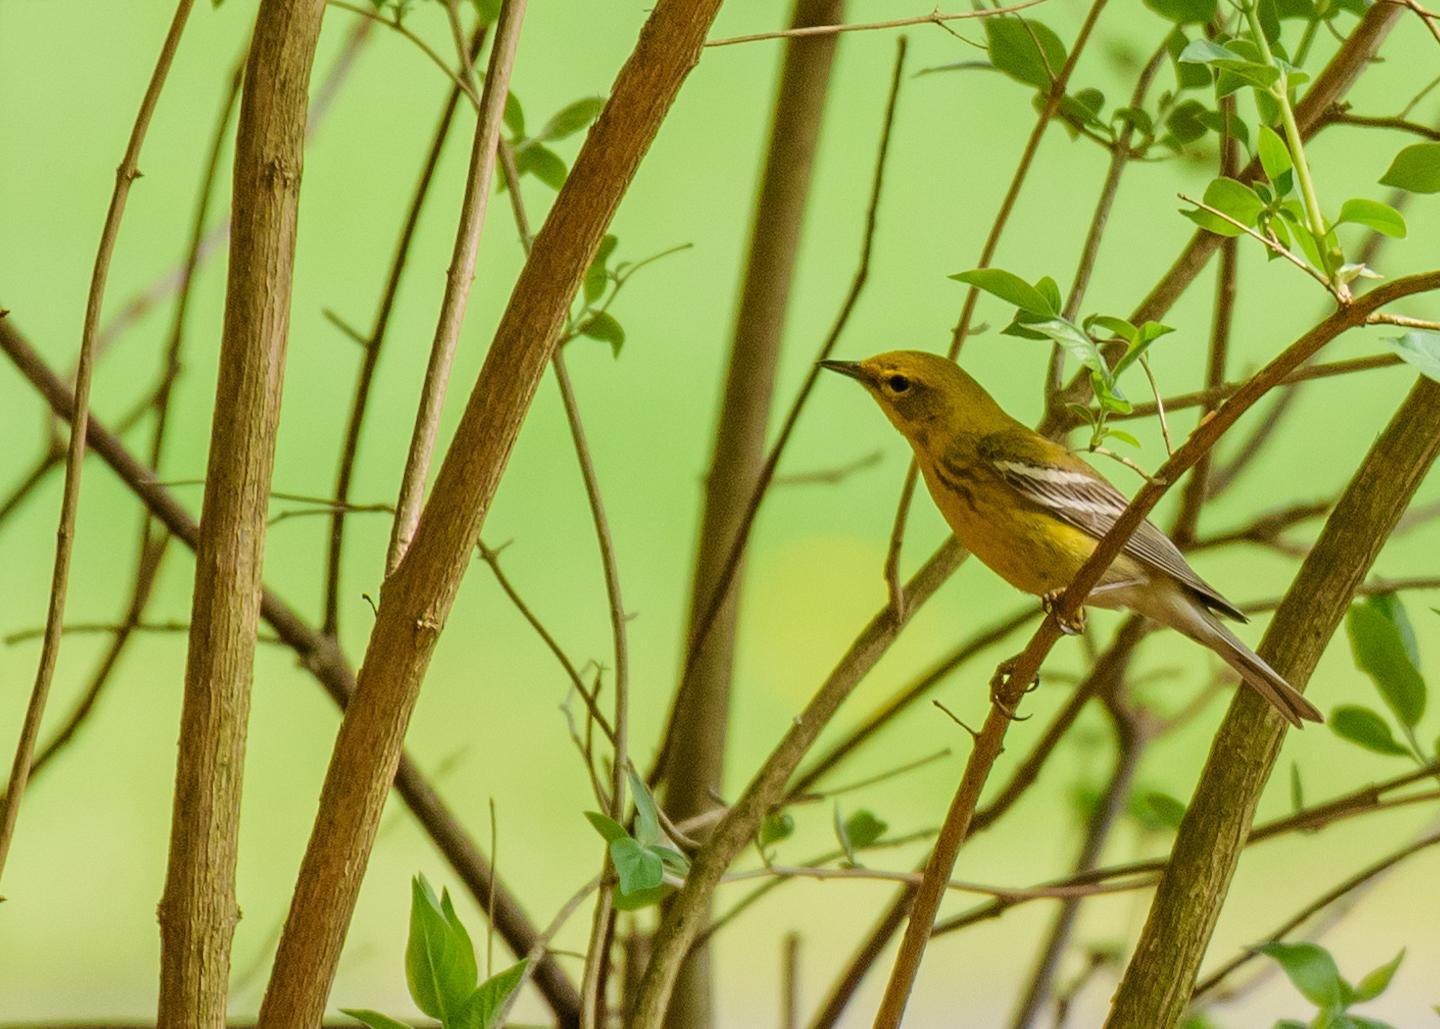 Pine Warbler Photo by Keshava Mysore